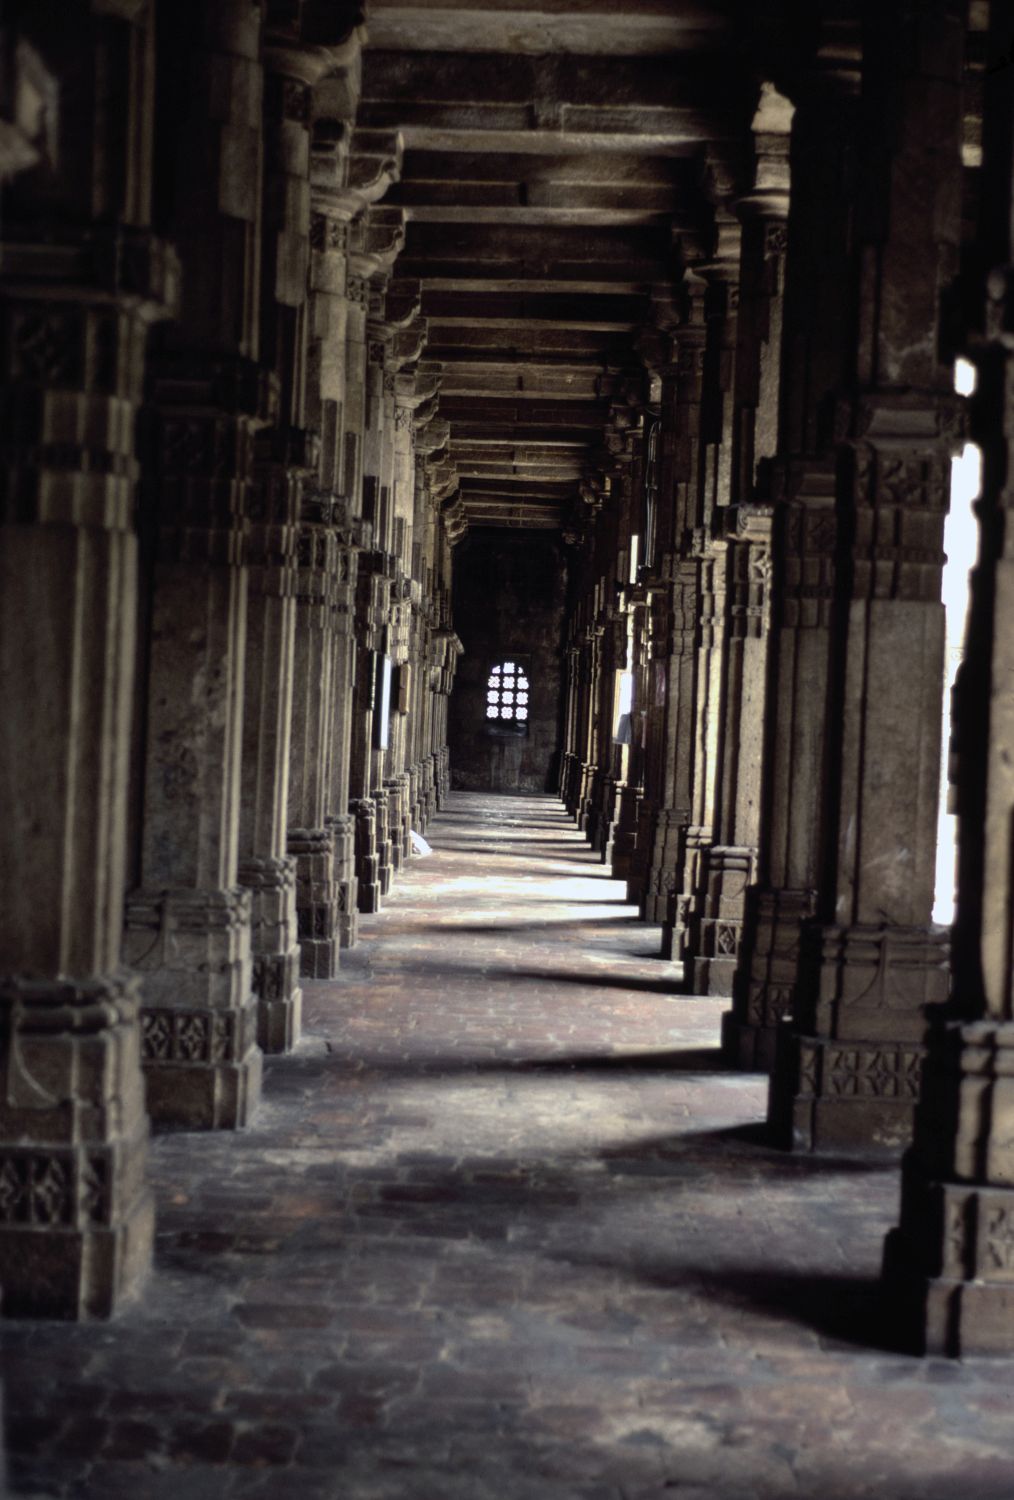 View along a pillared aisle inside the prayer hall.